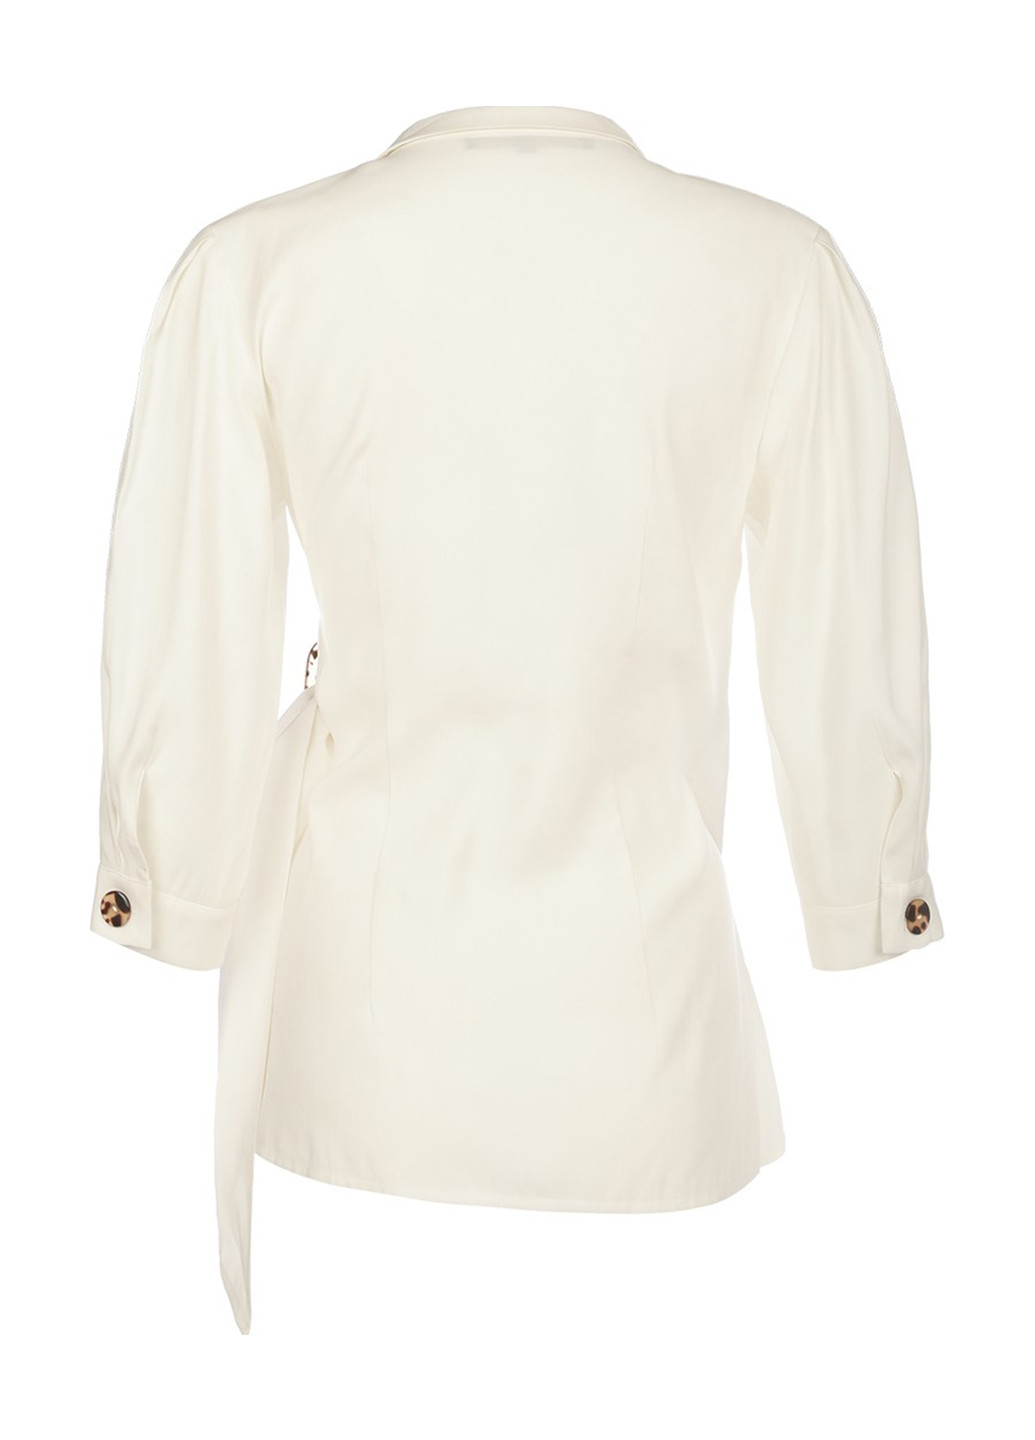 Белая демисезонная блузка на запах LOVE REPUBLIC